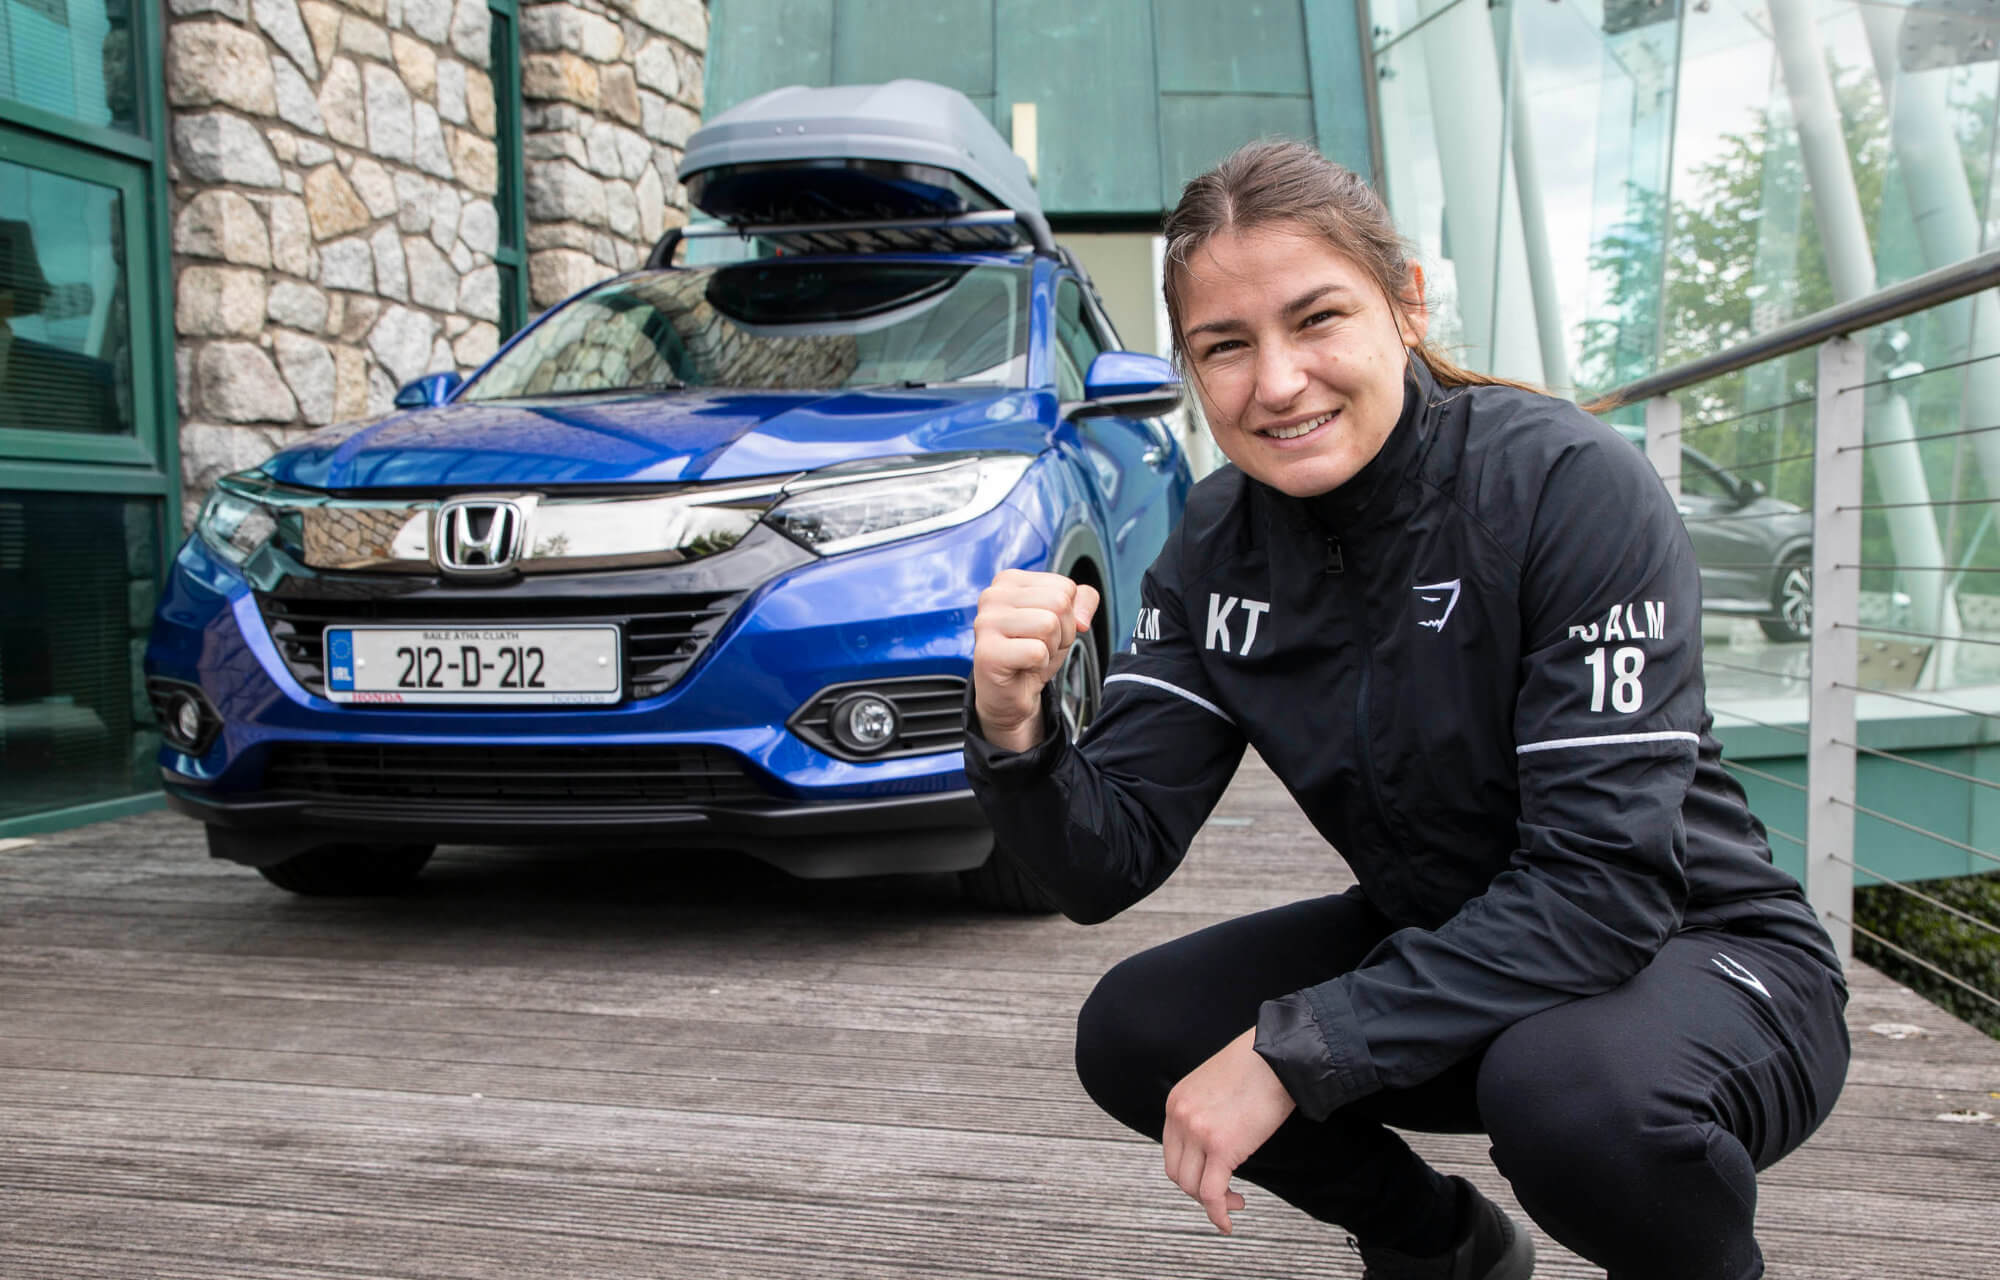 Brand Ambassadors Katie Taylor and Nikki Evans help launch Honda's new 212 HR-V offer